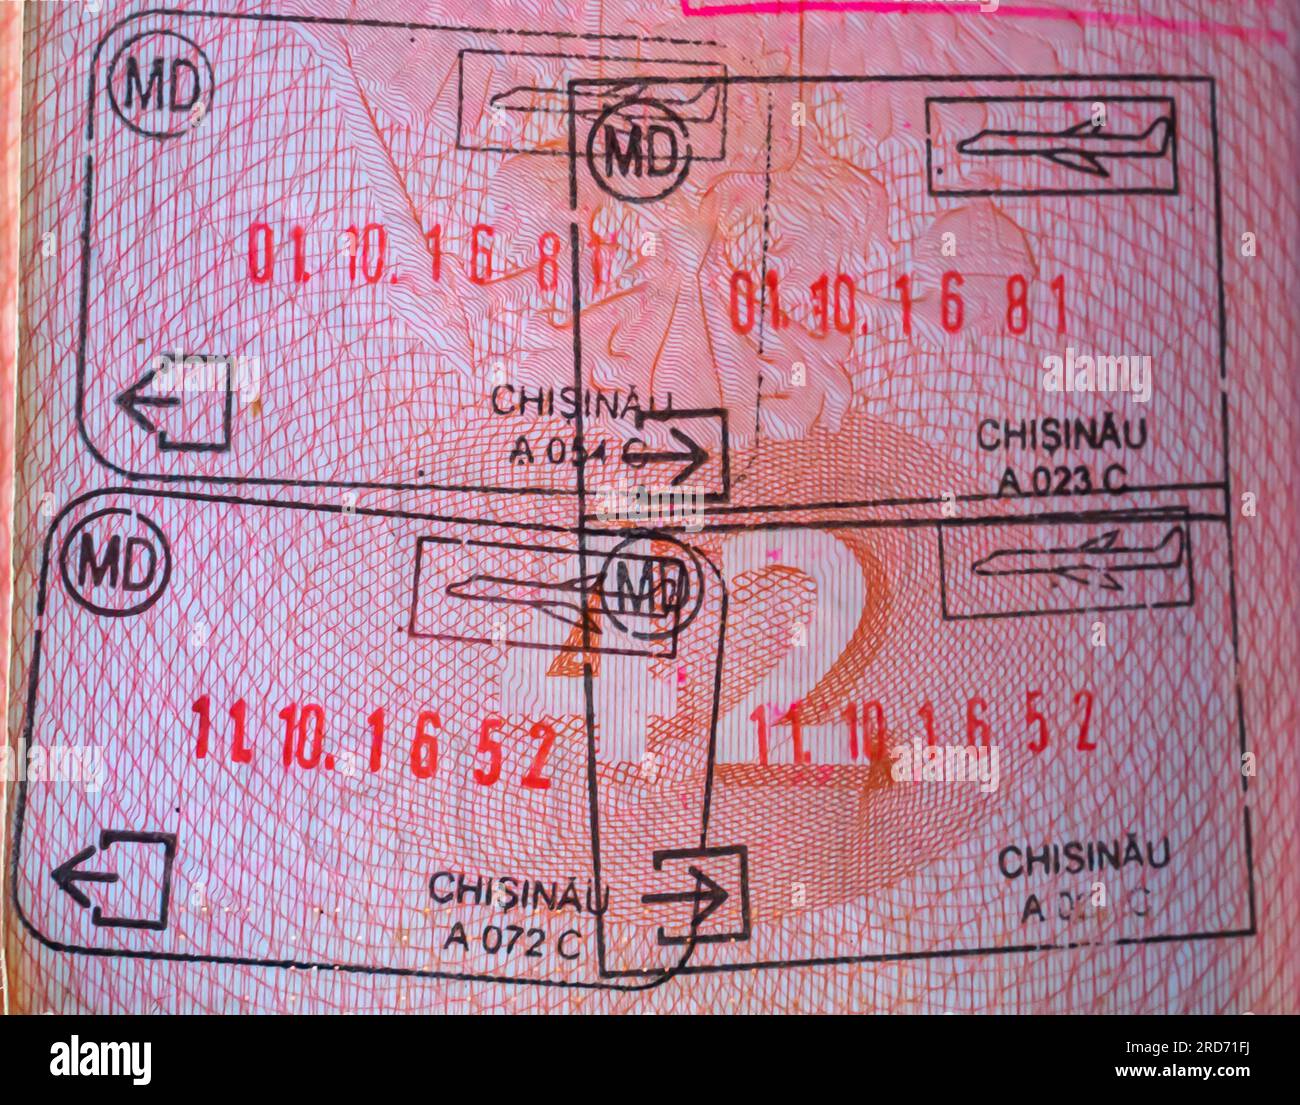 Moldova border crossing stamps. Moldova Chisinau entry visa stamp. Moldova Chisinau exit visa stamp 2016 Stock Photo